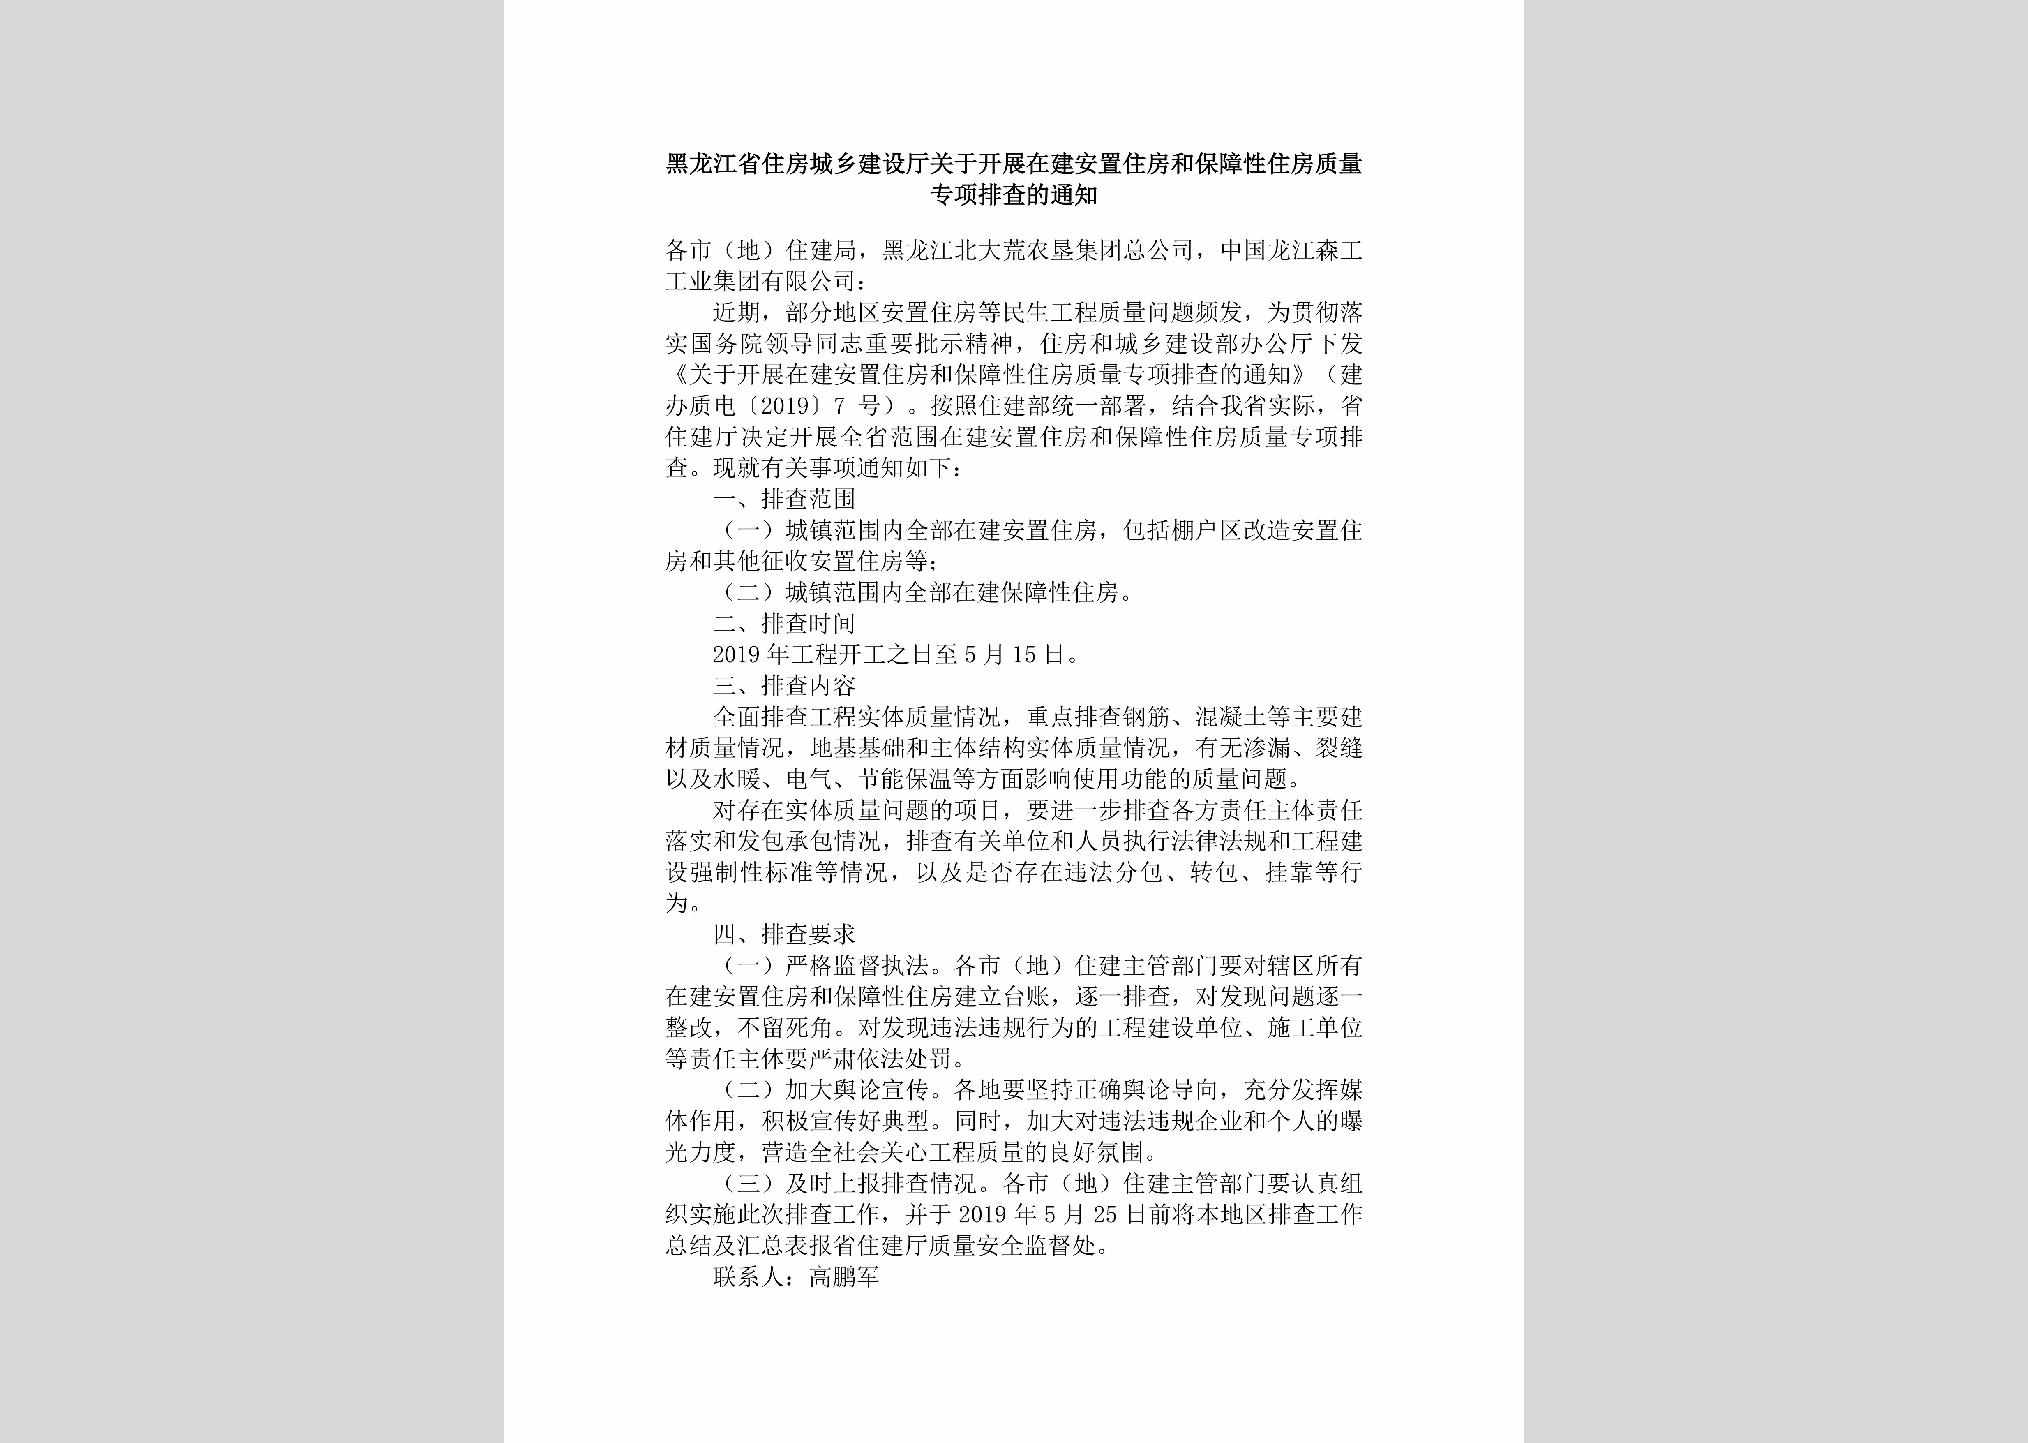 HLJ-GYKZZJAZ-2019：黑龙江省住房城乡建设厅关于开展在建安置住房和保障性住房质量专项排查的通知